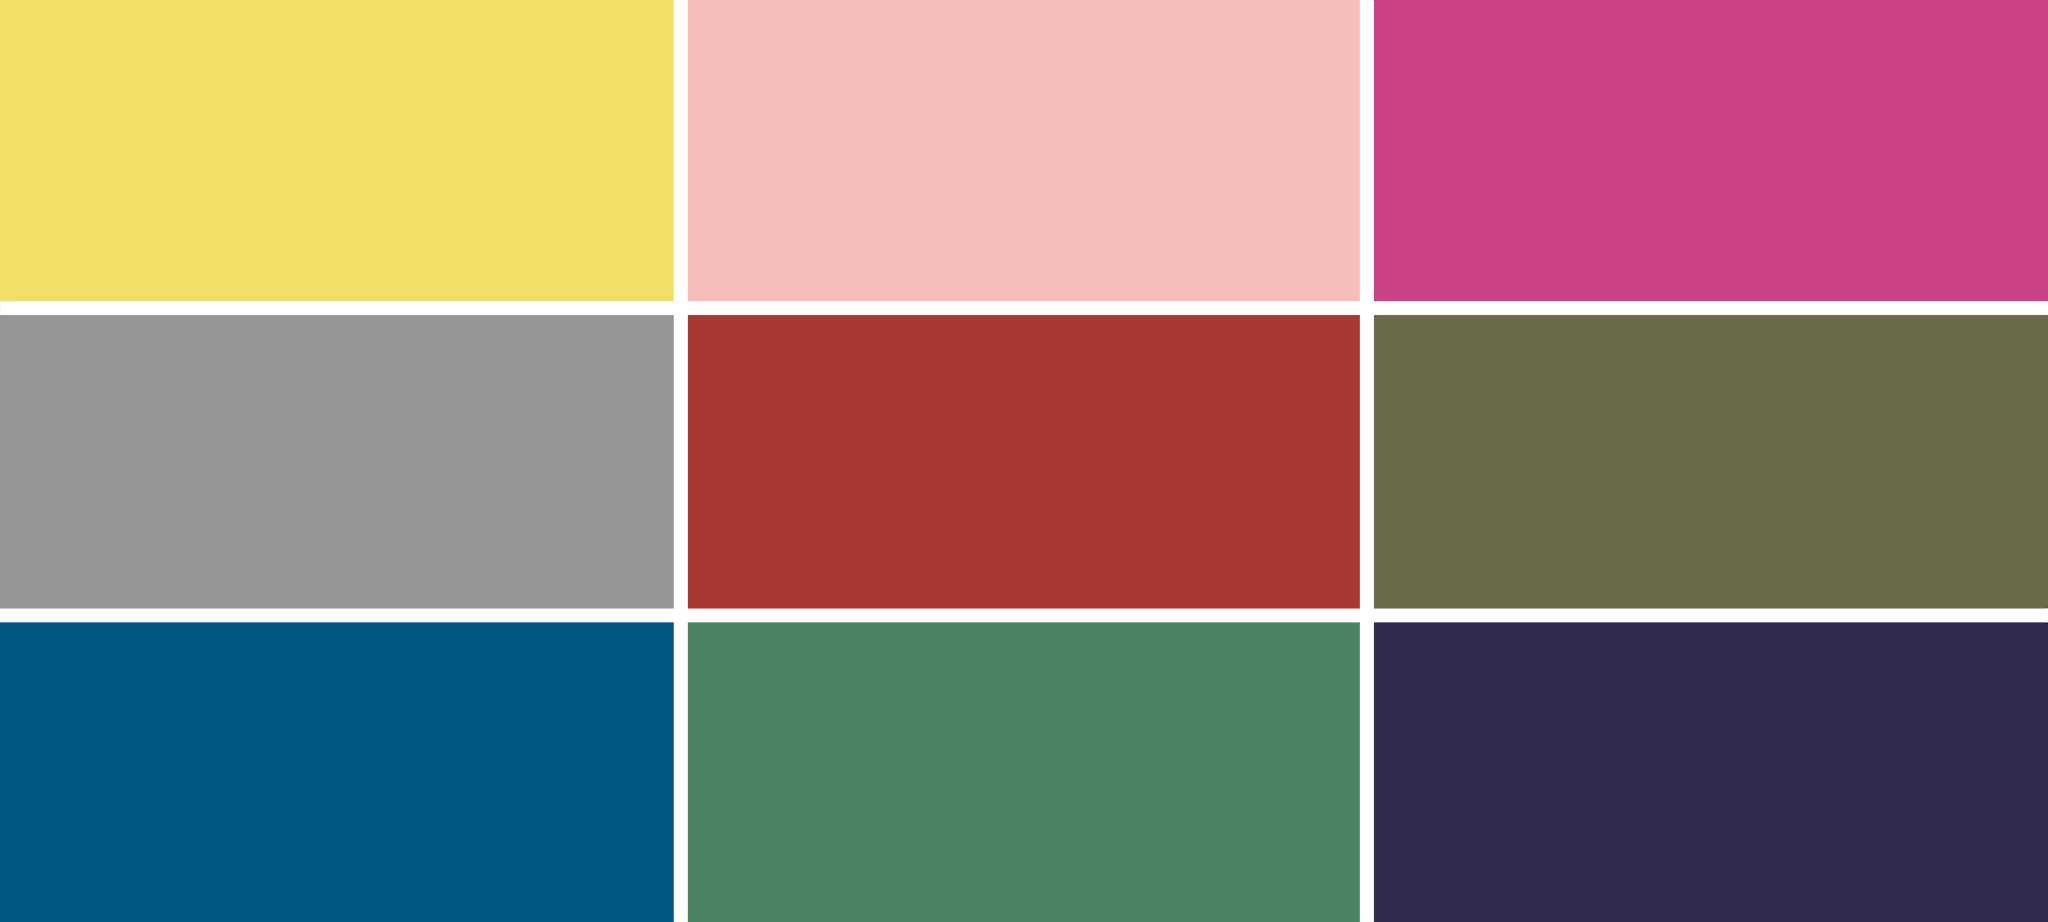 Модные цвета осень-зима 2020-2021 | lookcolor